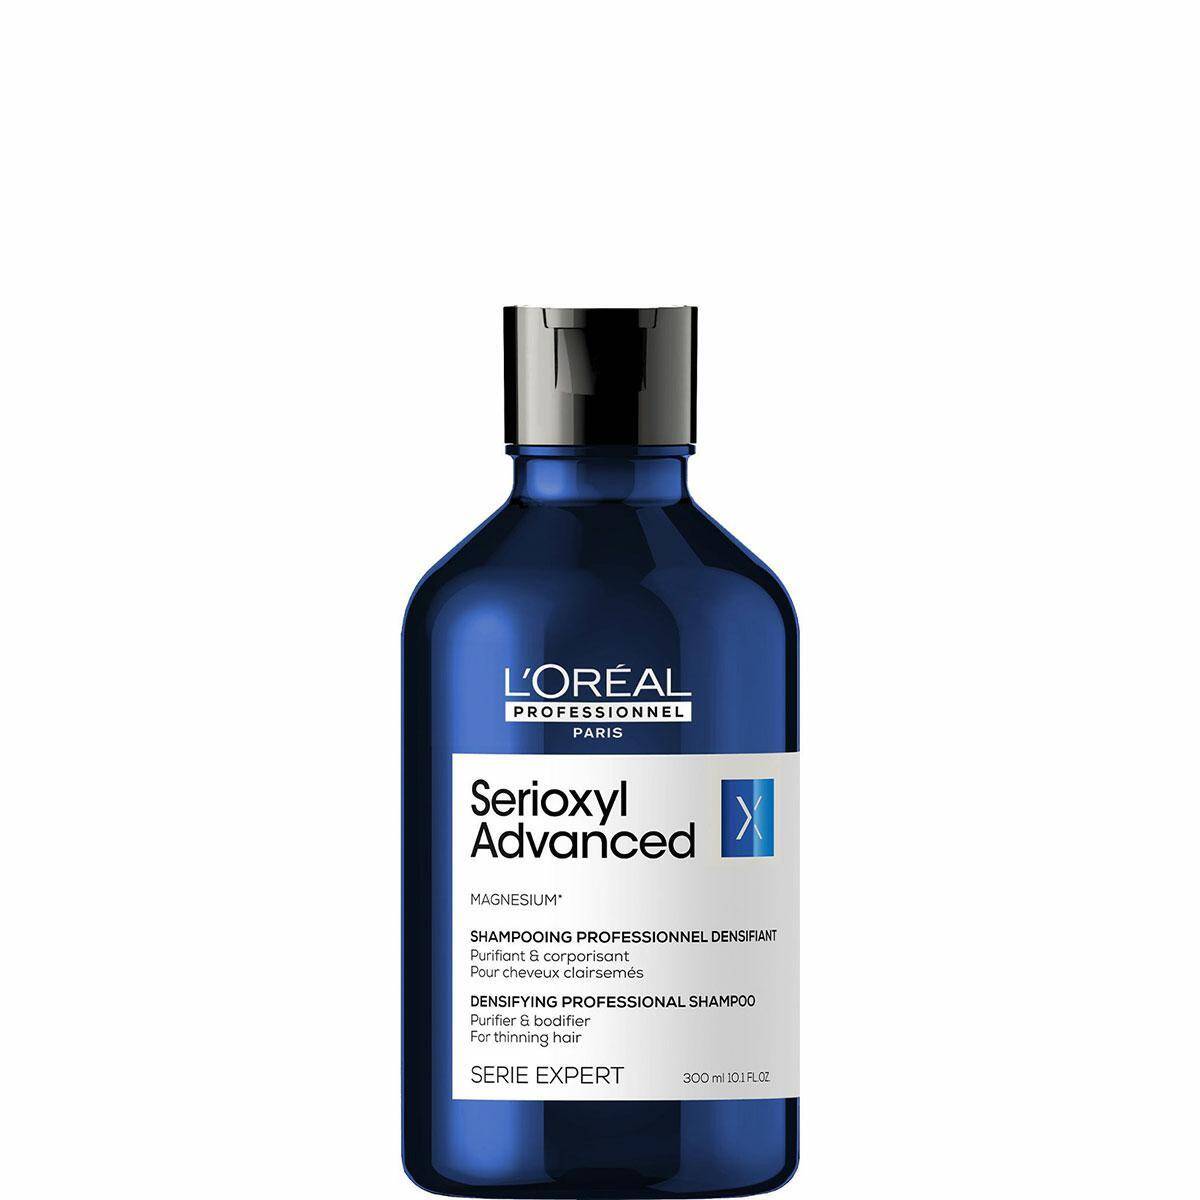 loreal volume fryzierski szampon